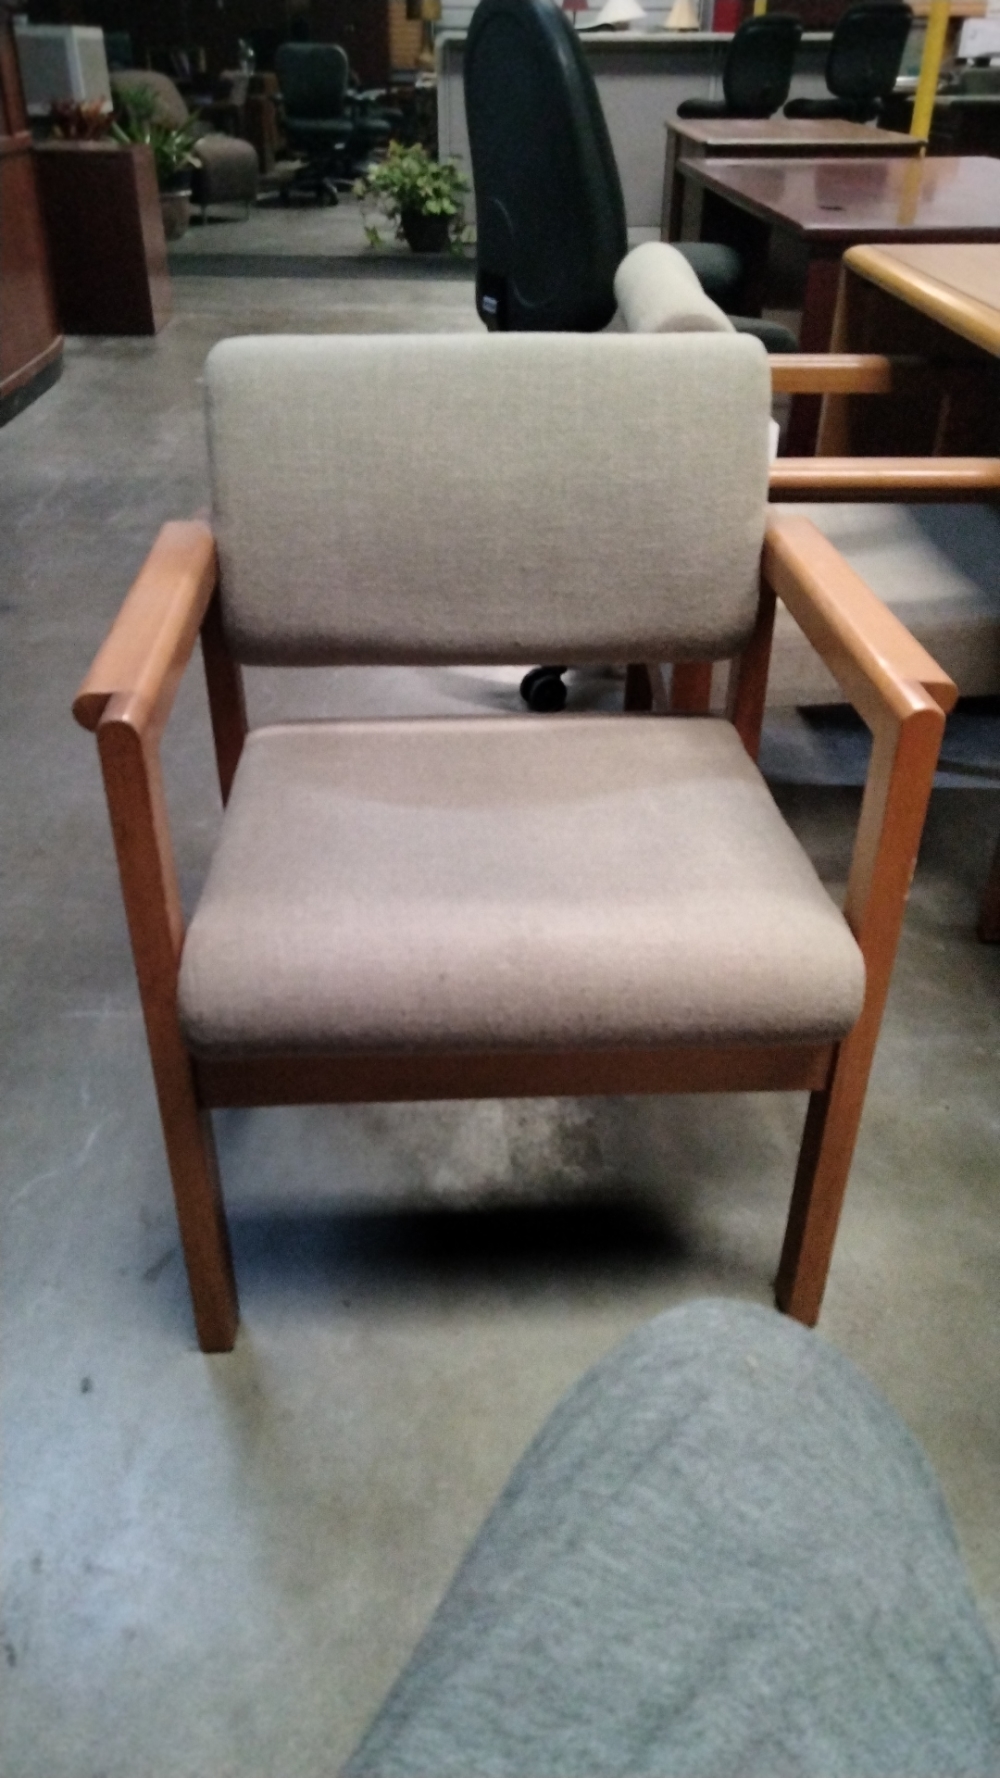  Wood frame side chair